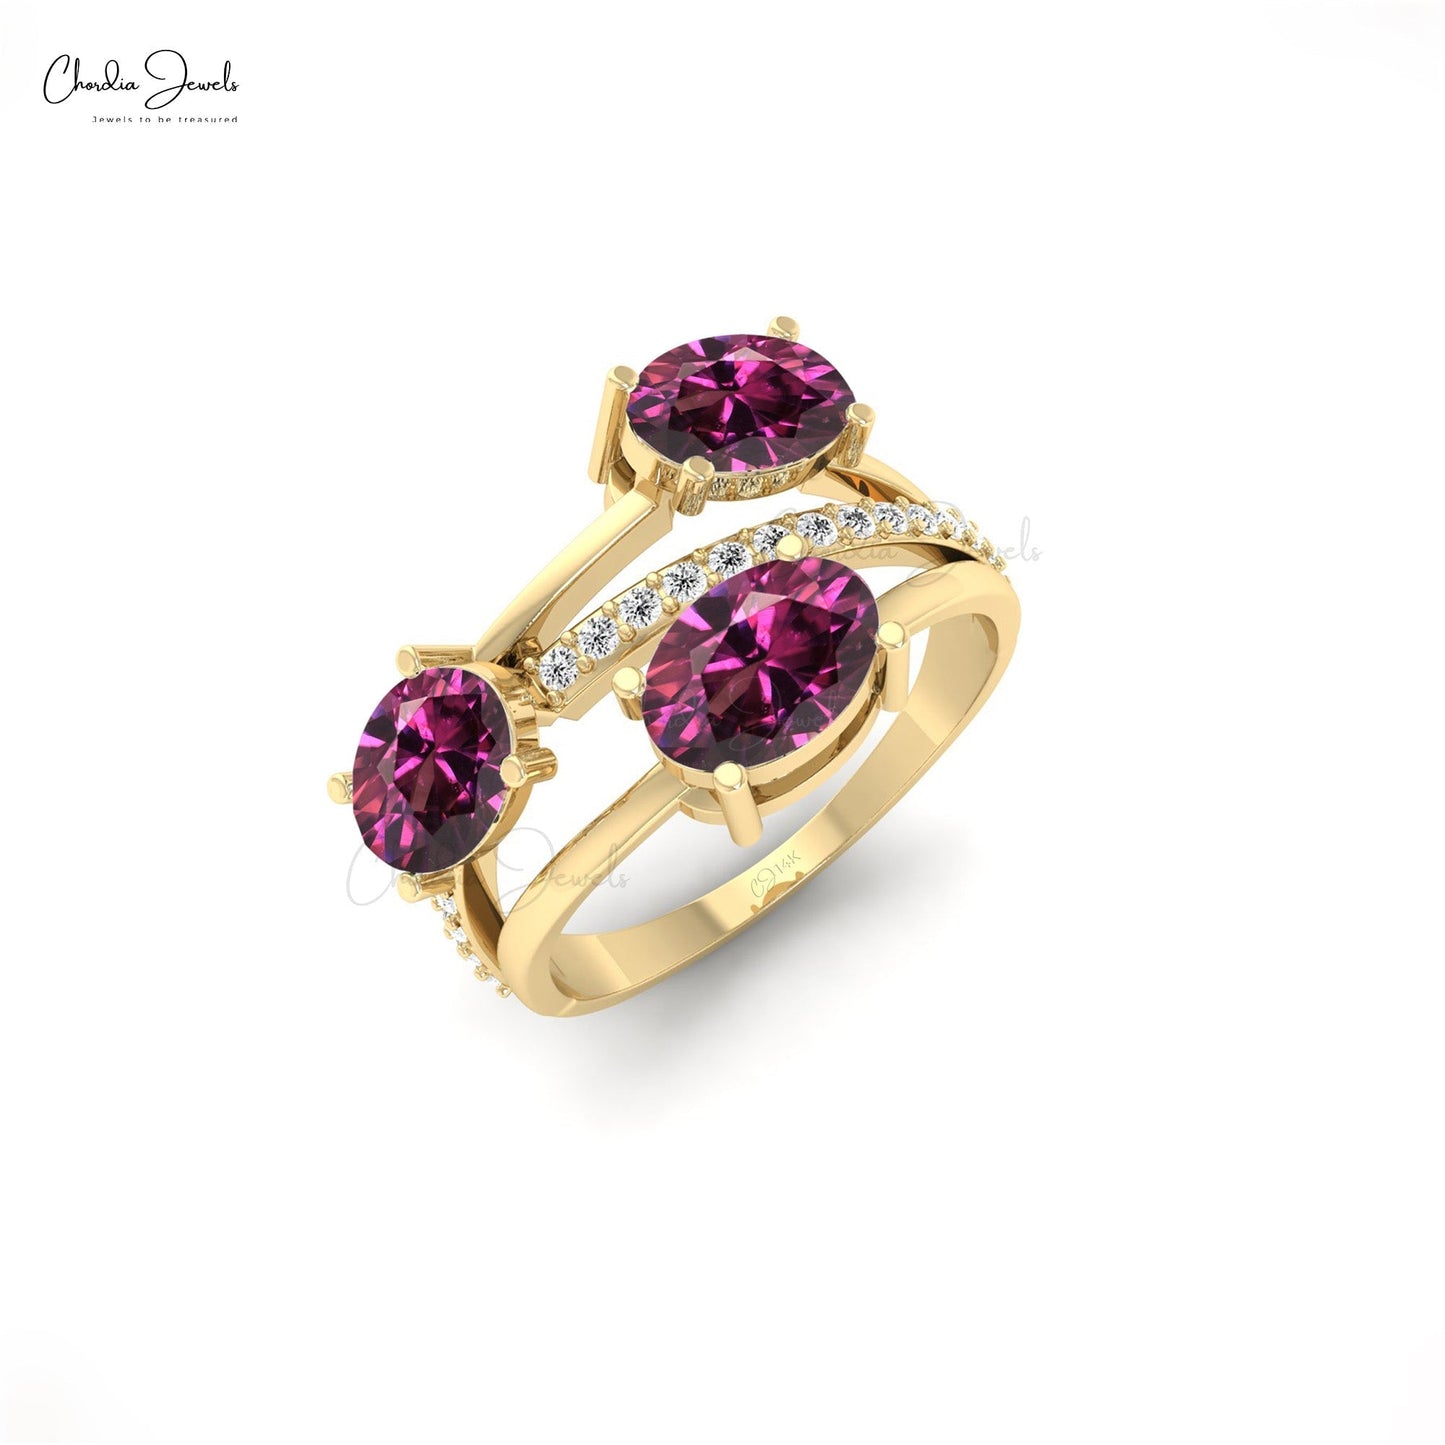 Classic 14k Gold Three-Stone Rhodolite Garnet Engagement Ring for Her